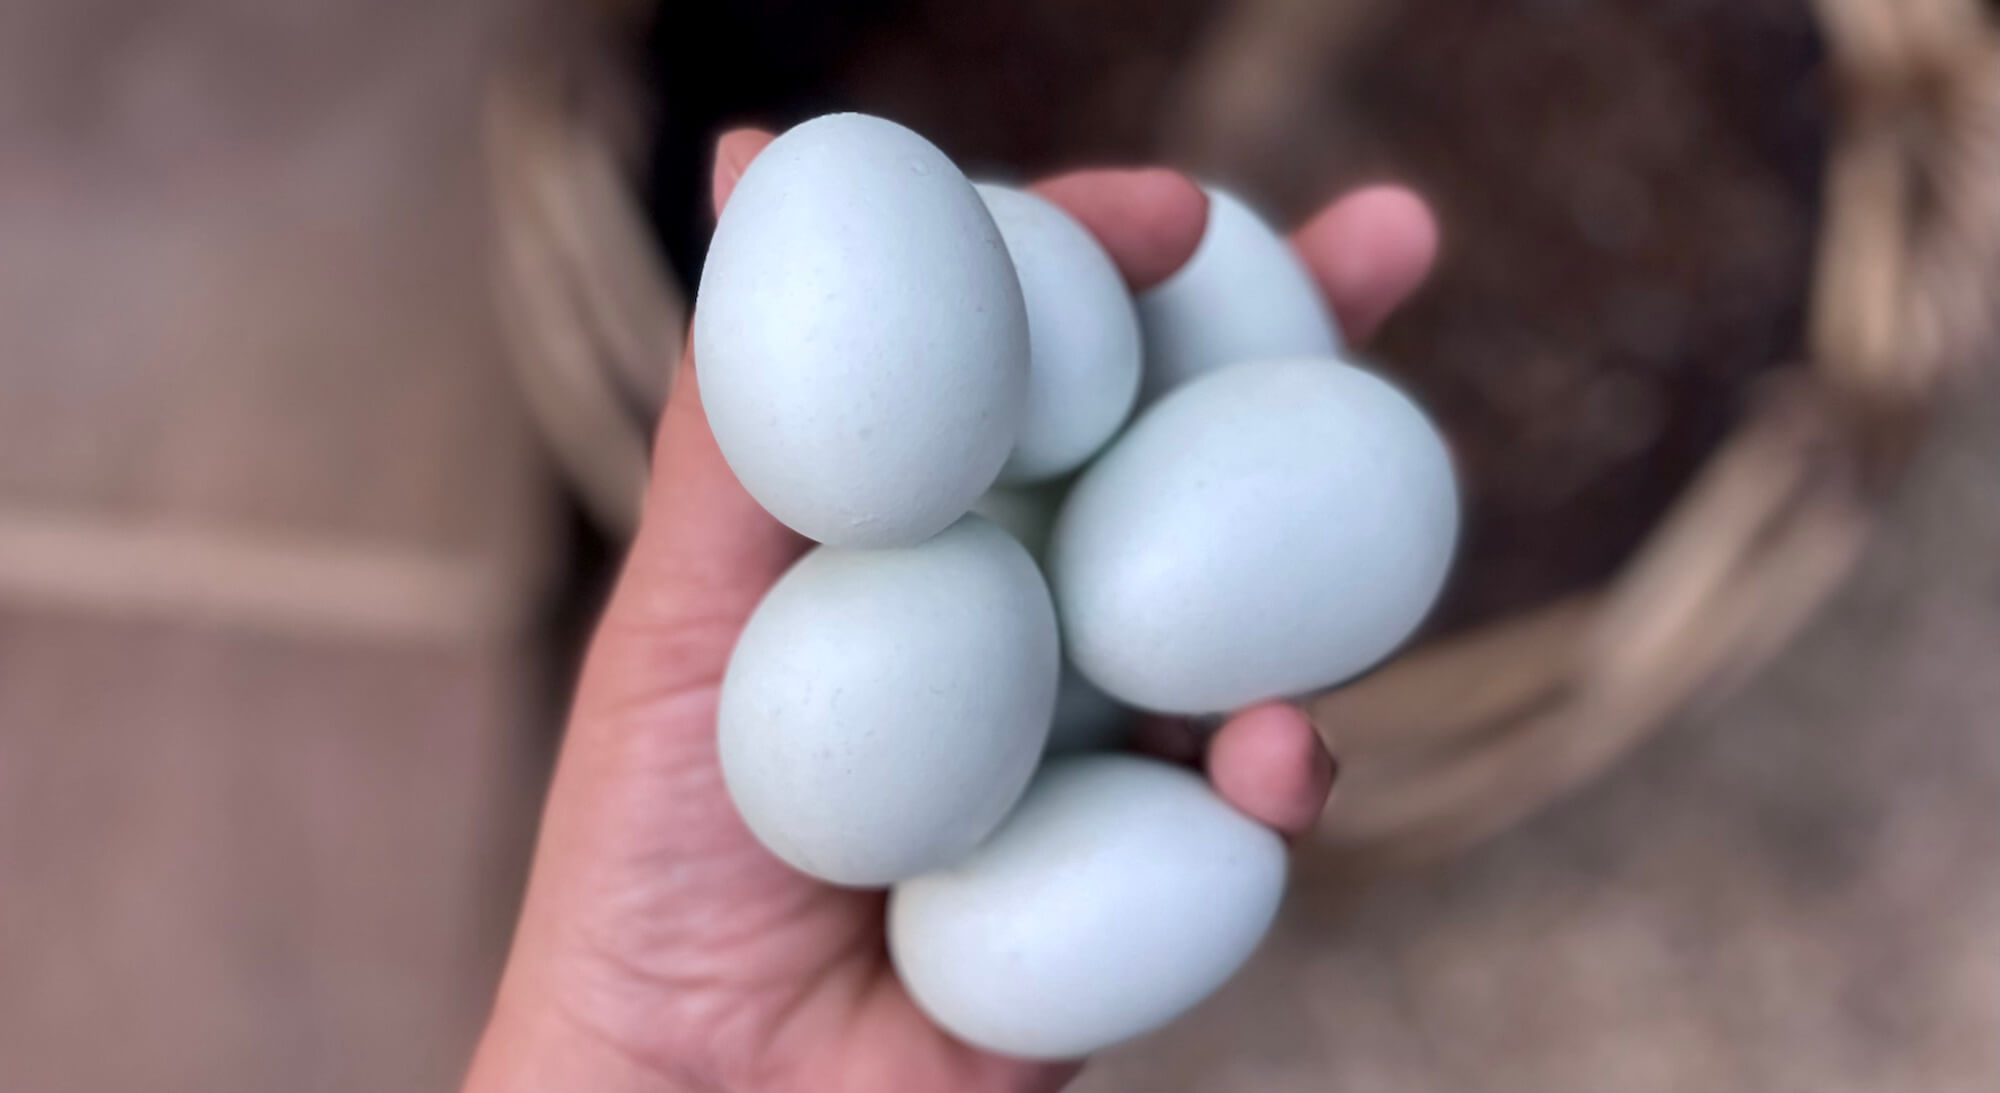 handful of blue eggs